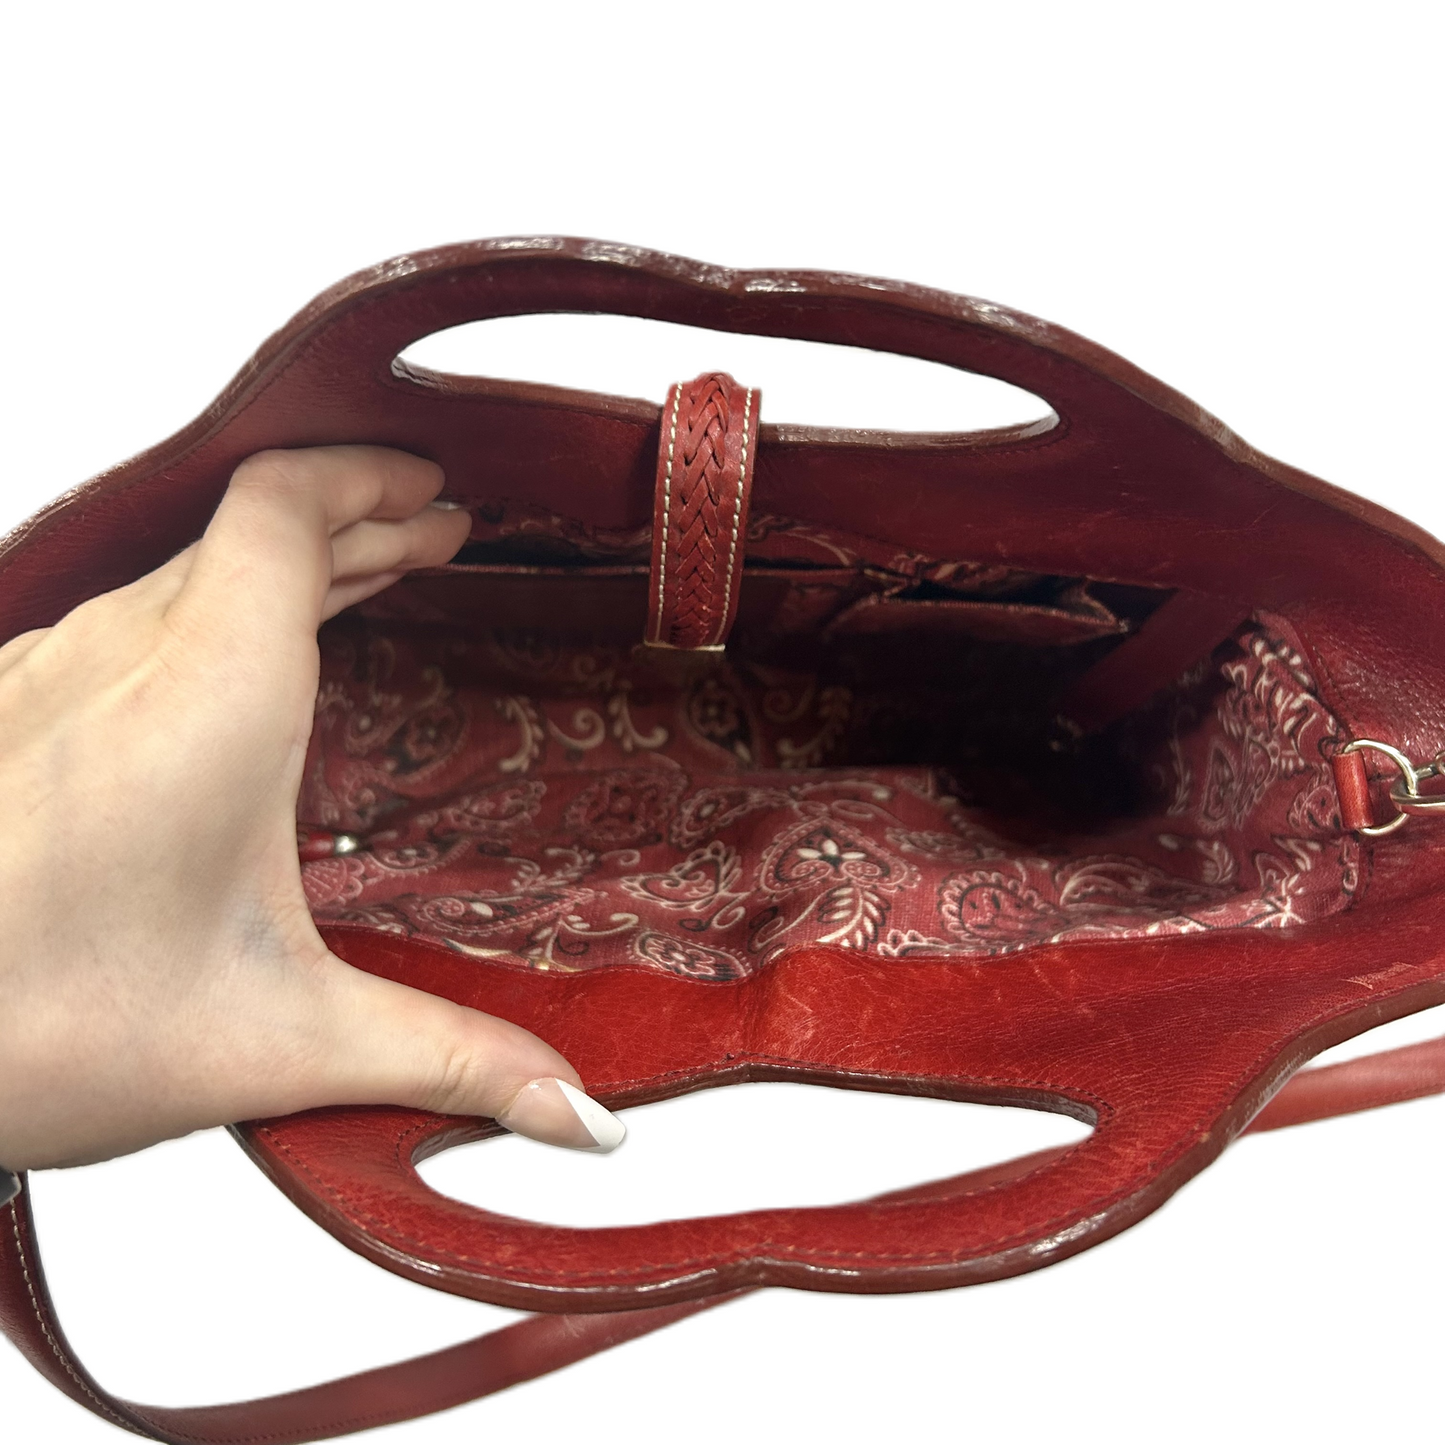 Handbag By Brighton  Size: Medium